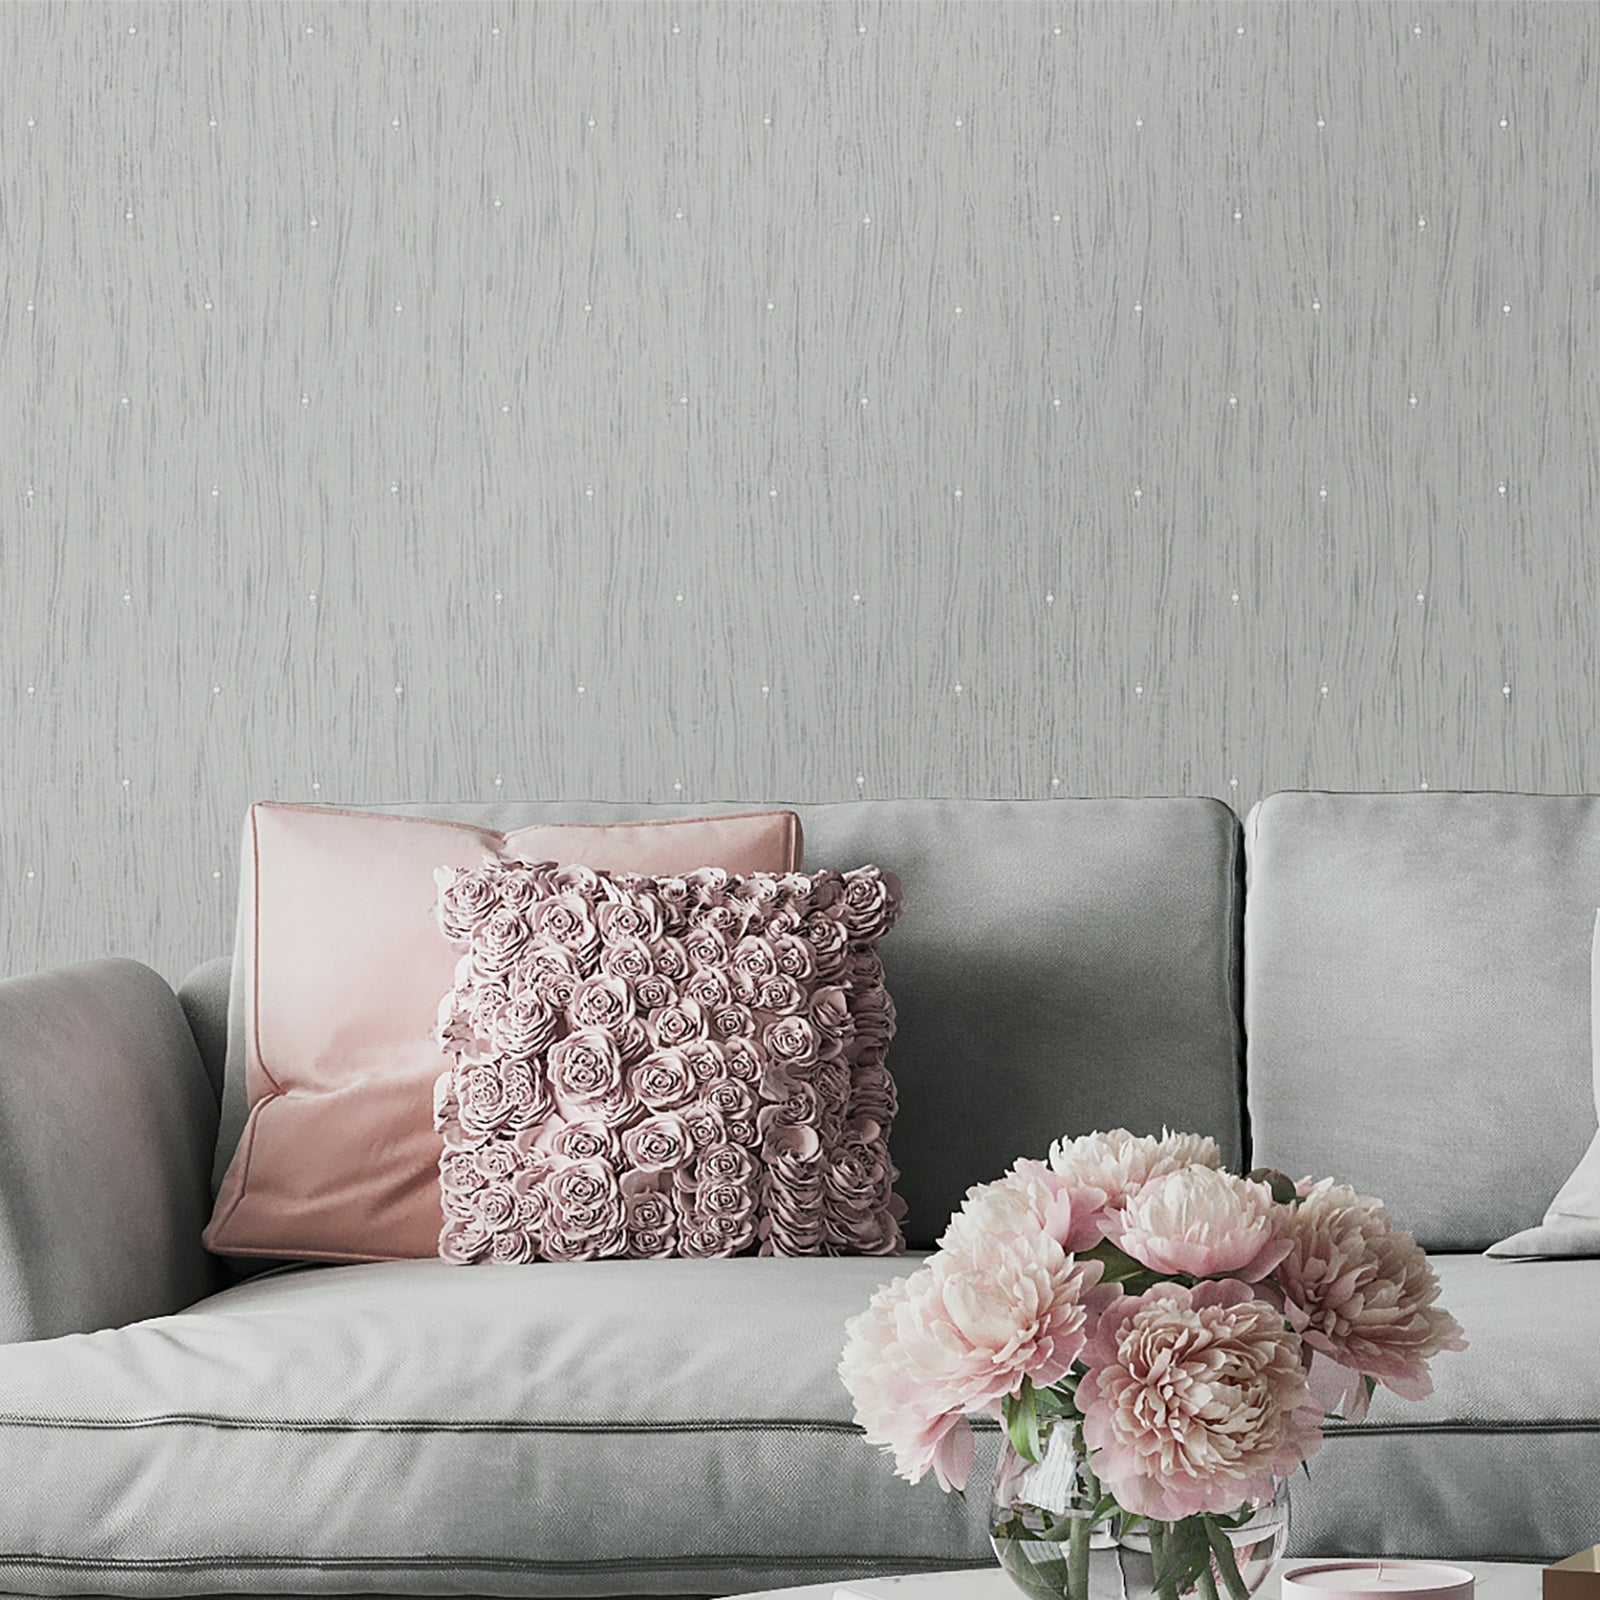 Tiffany Pearl Dark Silver Wallpaper | WonderWall by Nobletts | #Variant SKU# | Belgravia